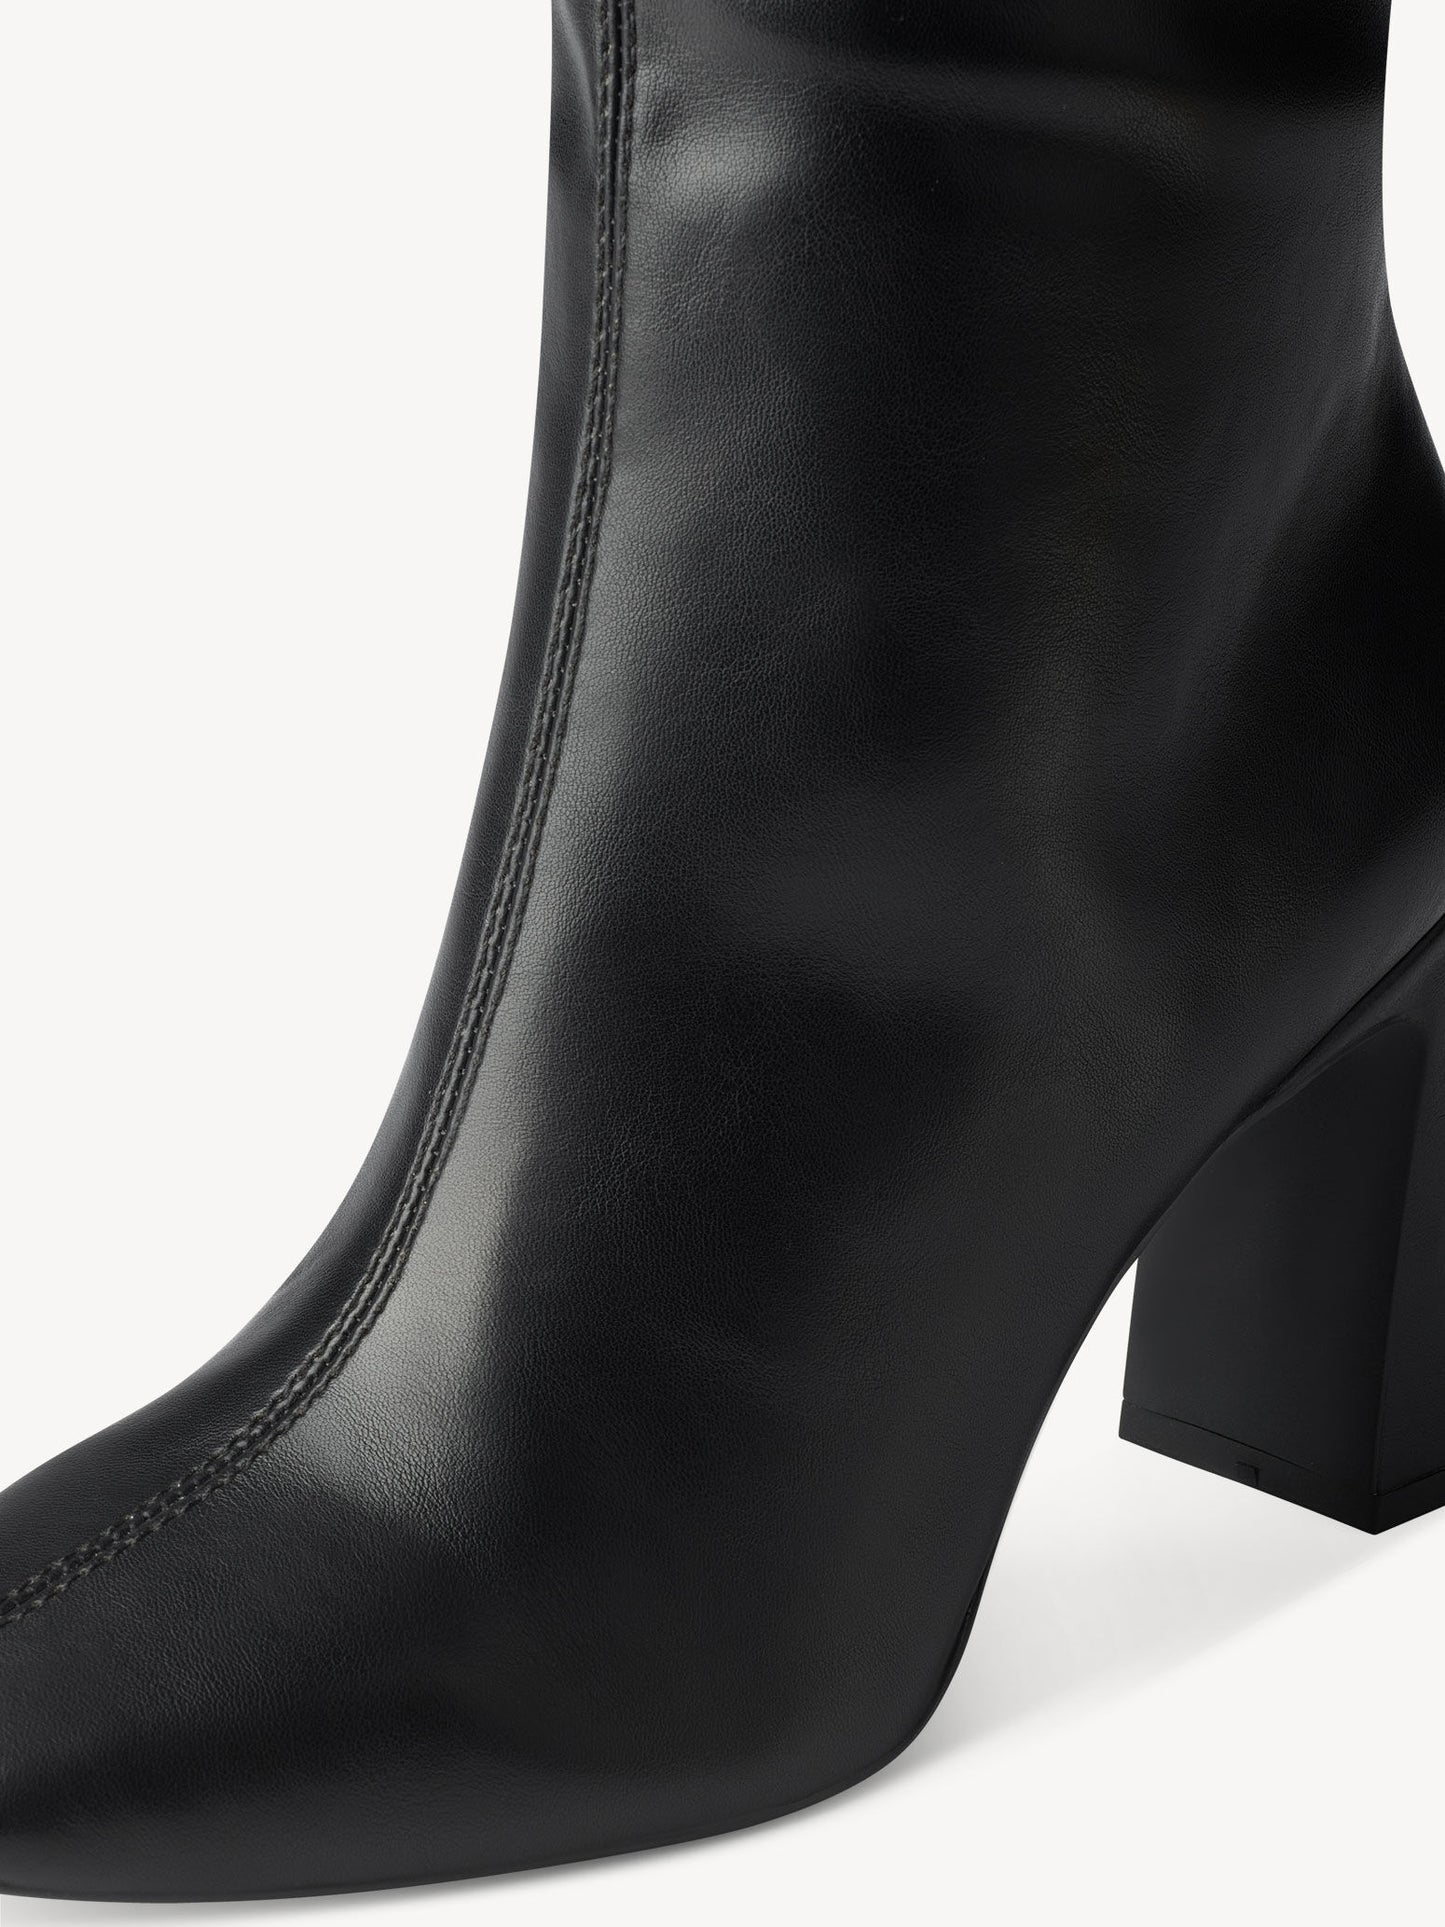 Tall Heeled Vegan Leather Boots - Black